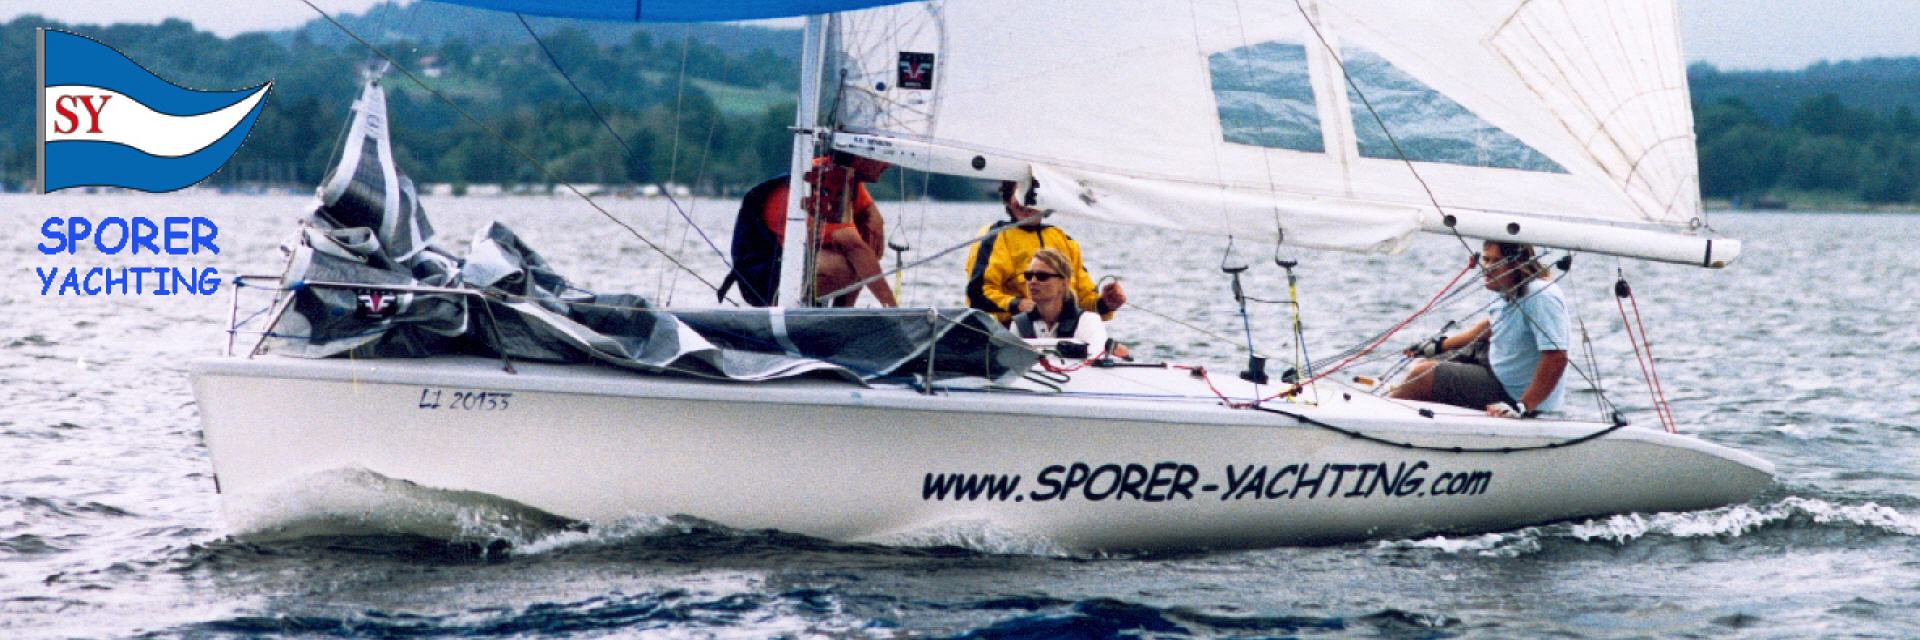 sporer yachting segelschule yachtcharter yachthandel lindau (bodensee)